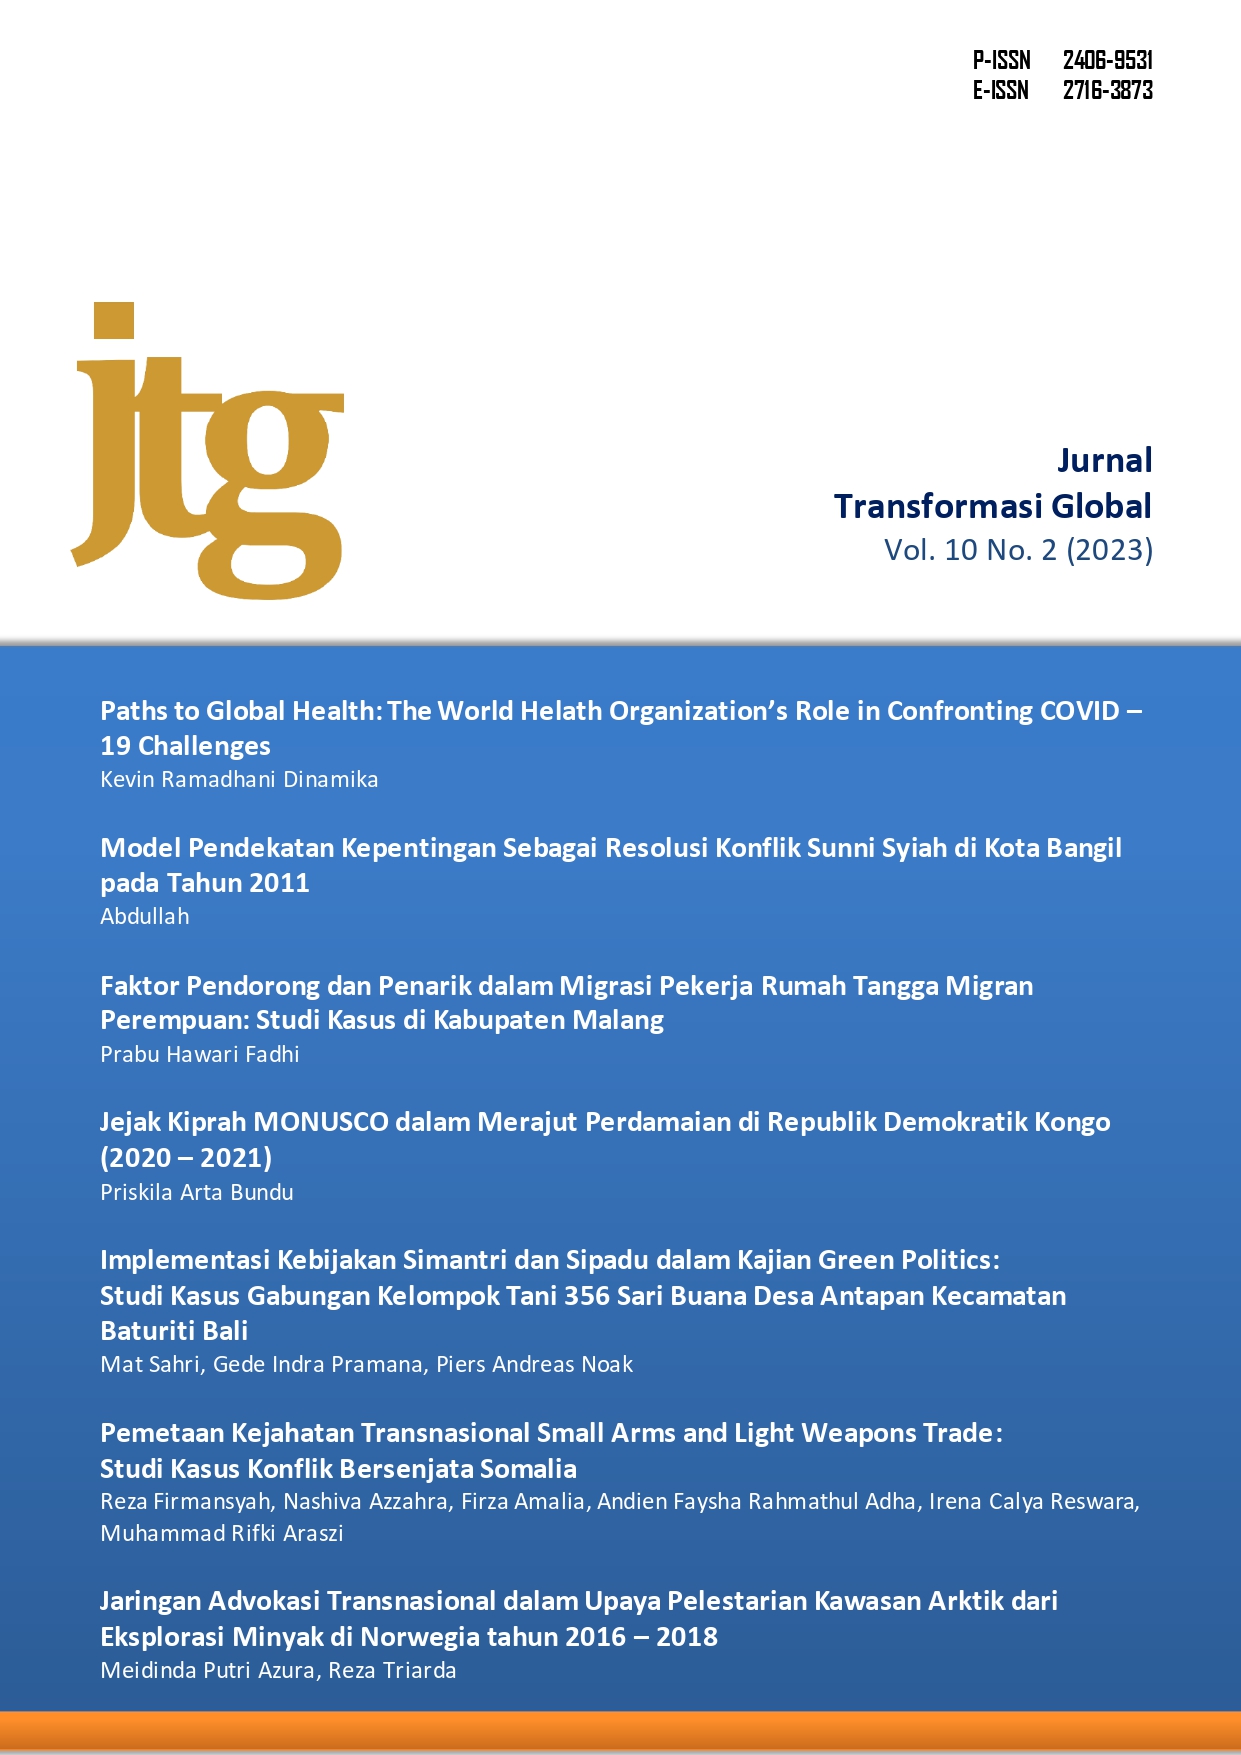 					View Vol. 10 No. 2 (2023): Transformasi Global (JTG)
				